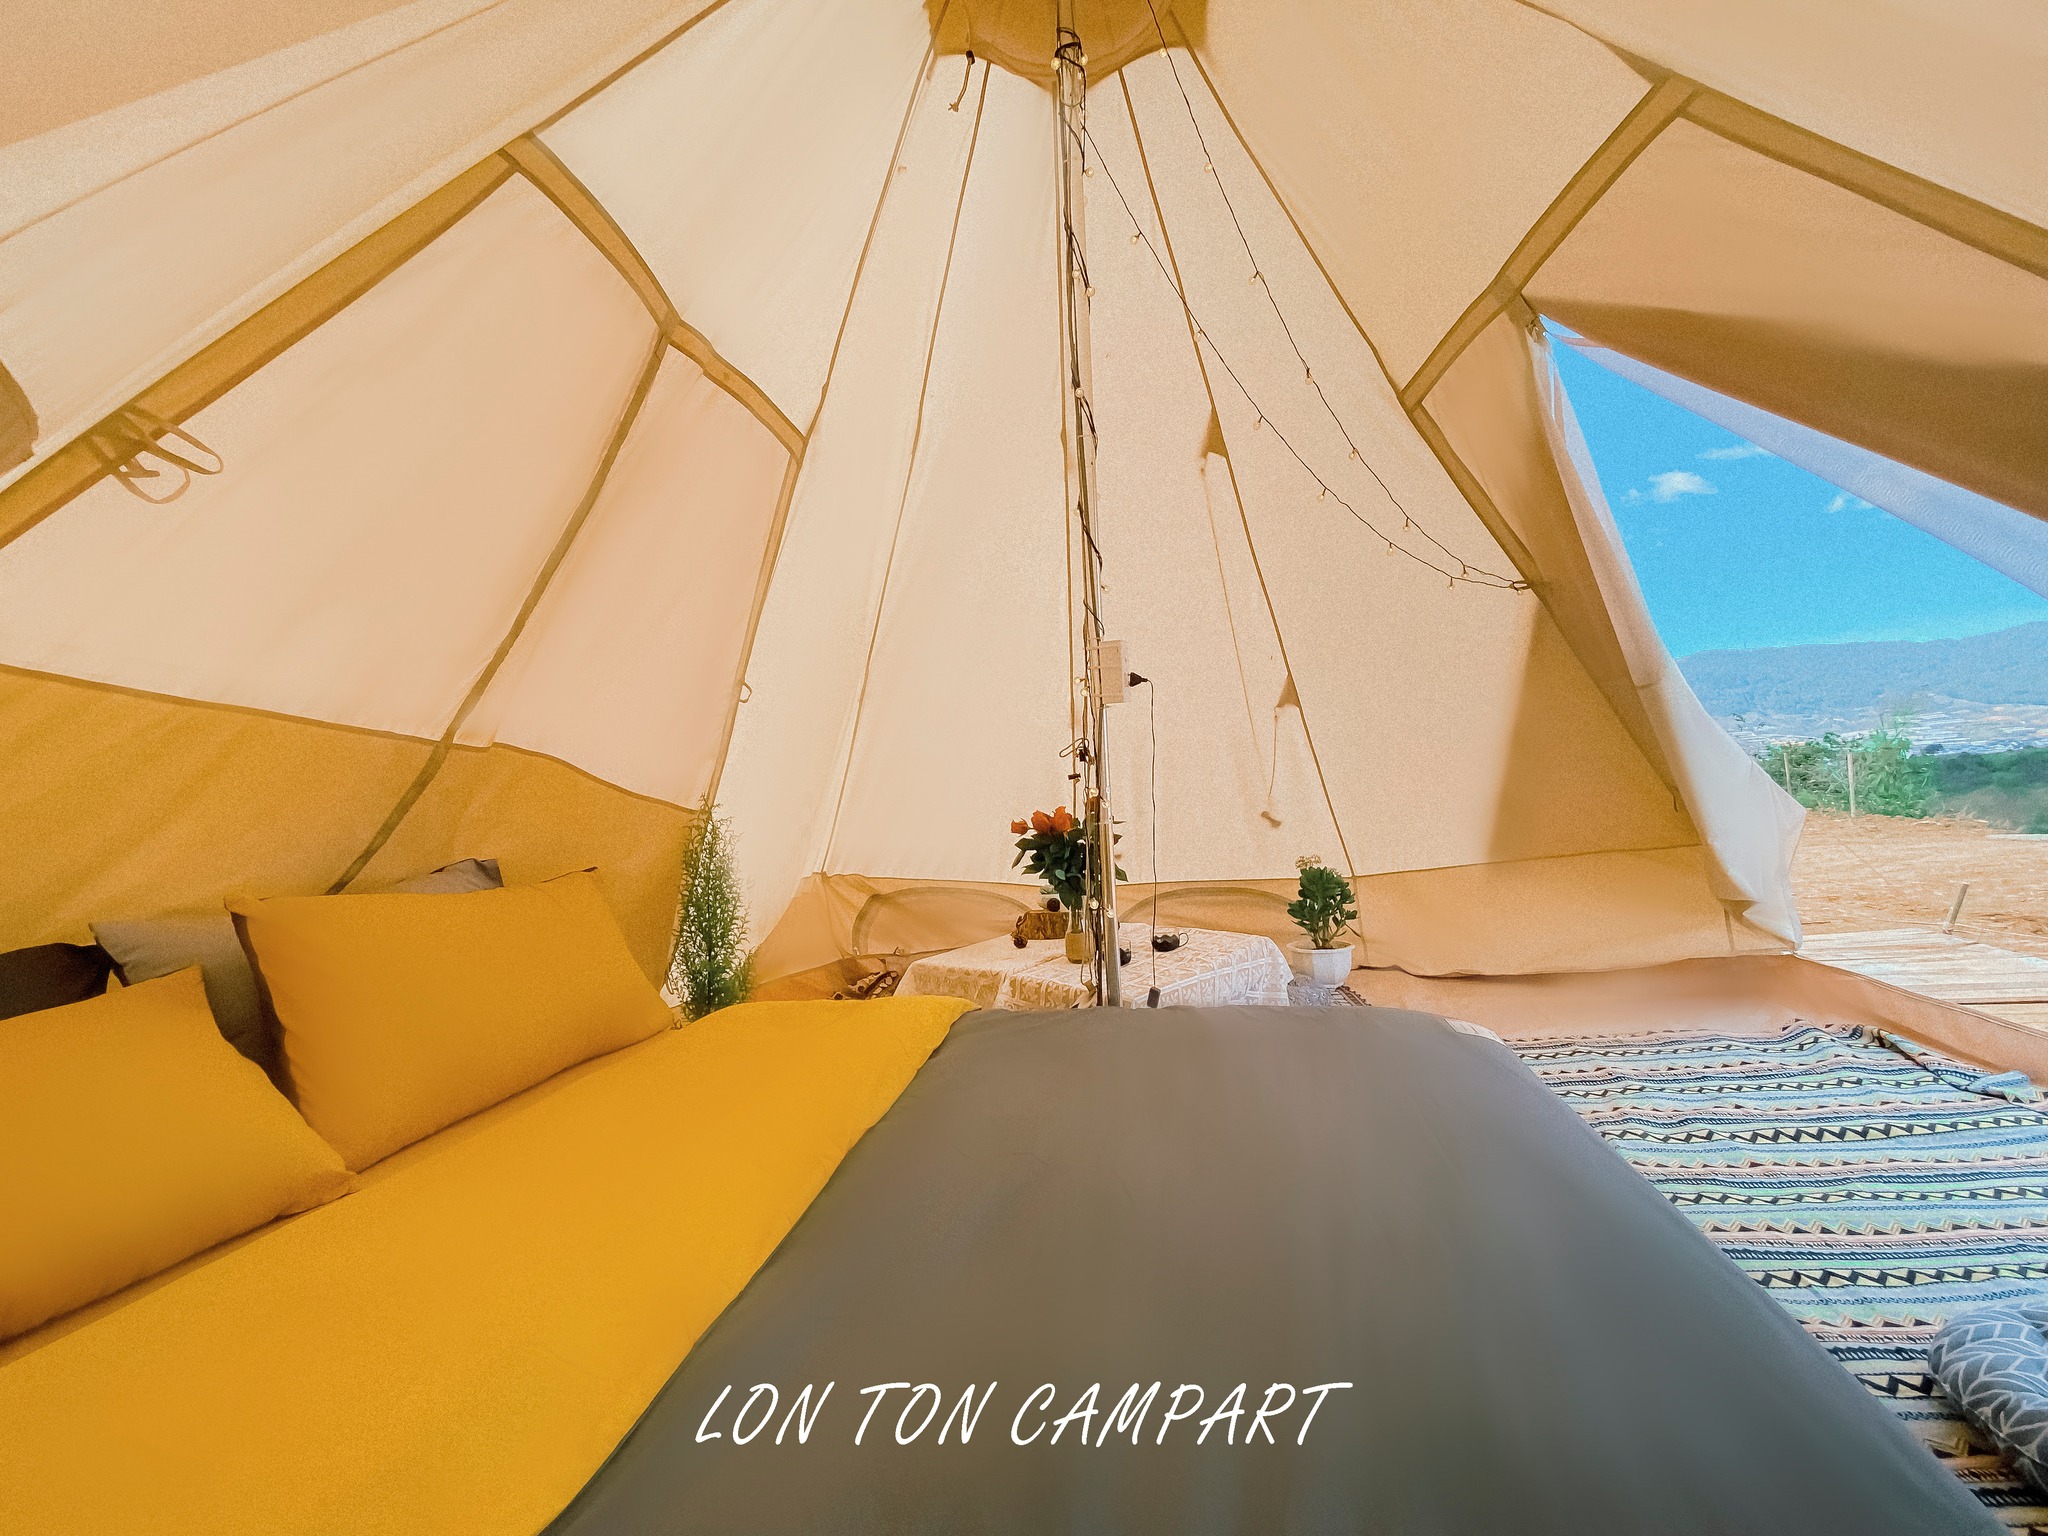 Lon Ton CampArt & Coffee -Đà Lạt